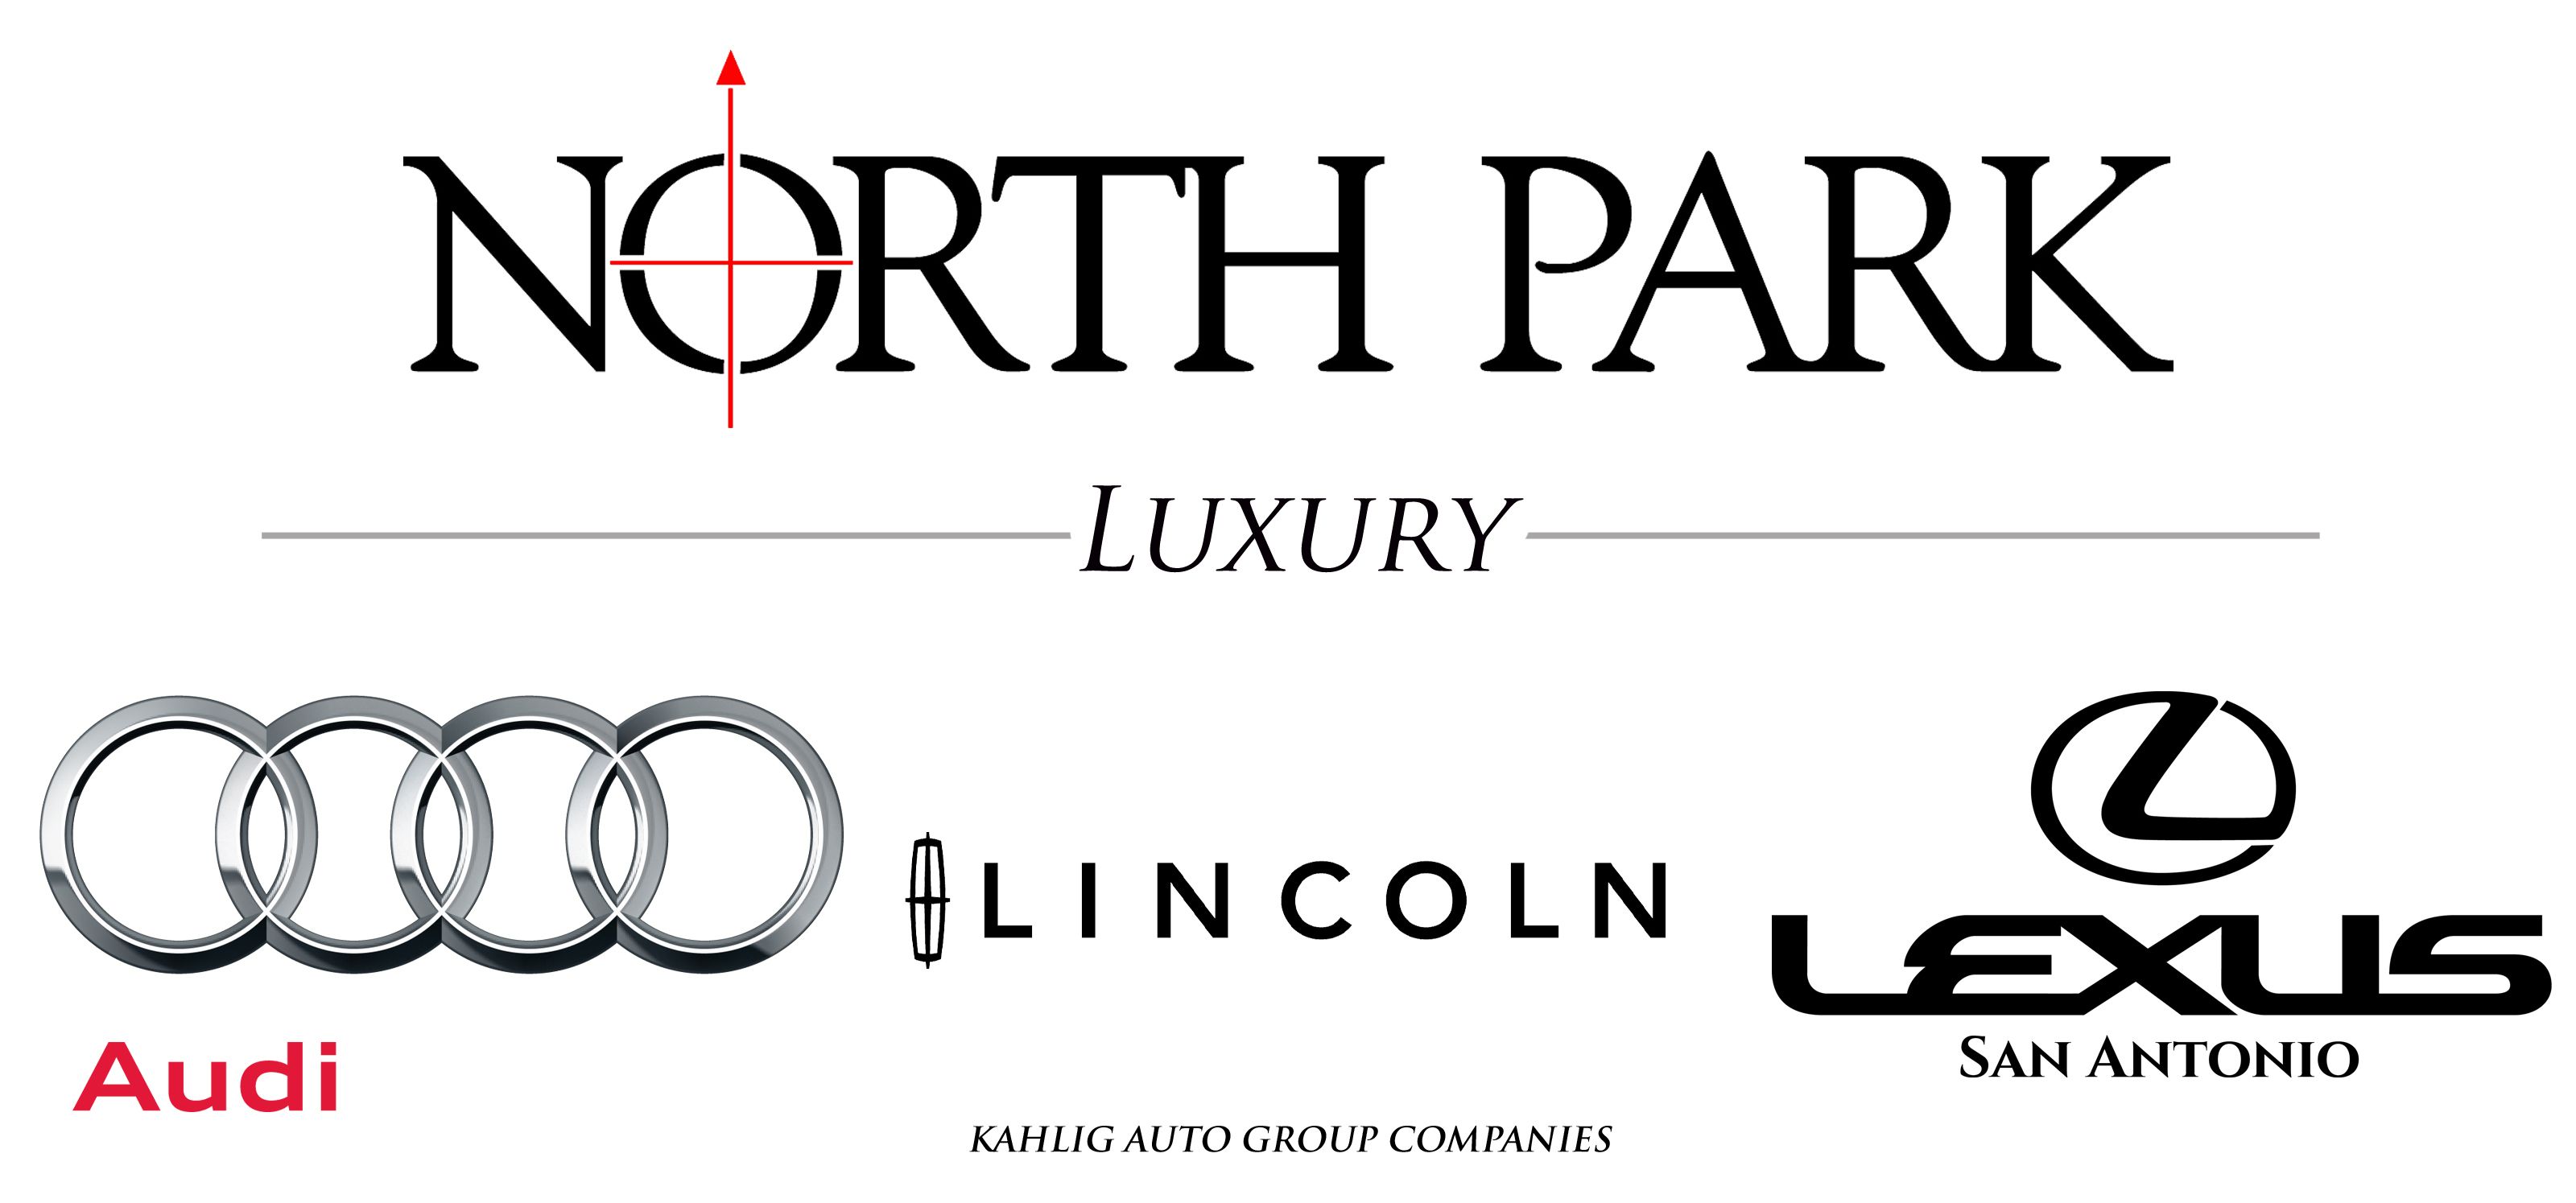 North Park Luxury Dealership- Audi, Lincoln, & Lexus